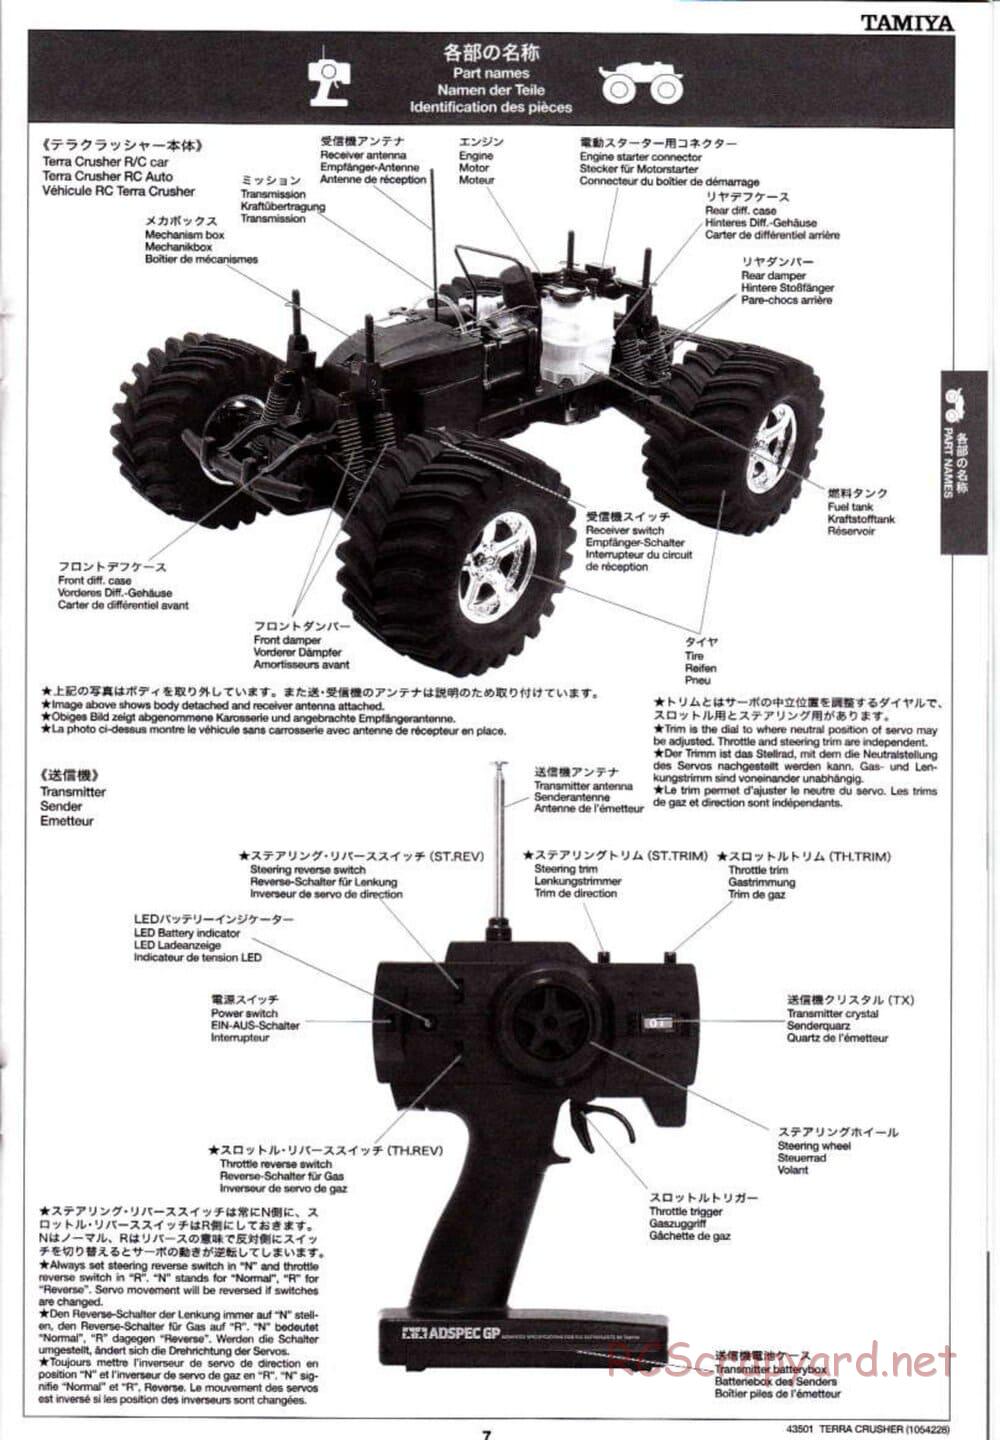 Tamiya - Terra Crusher - TGM-02 Chassis - Manual - Page 7